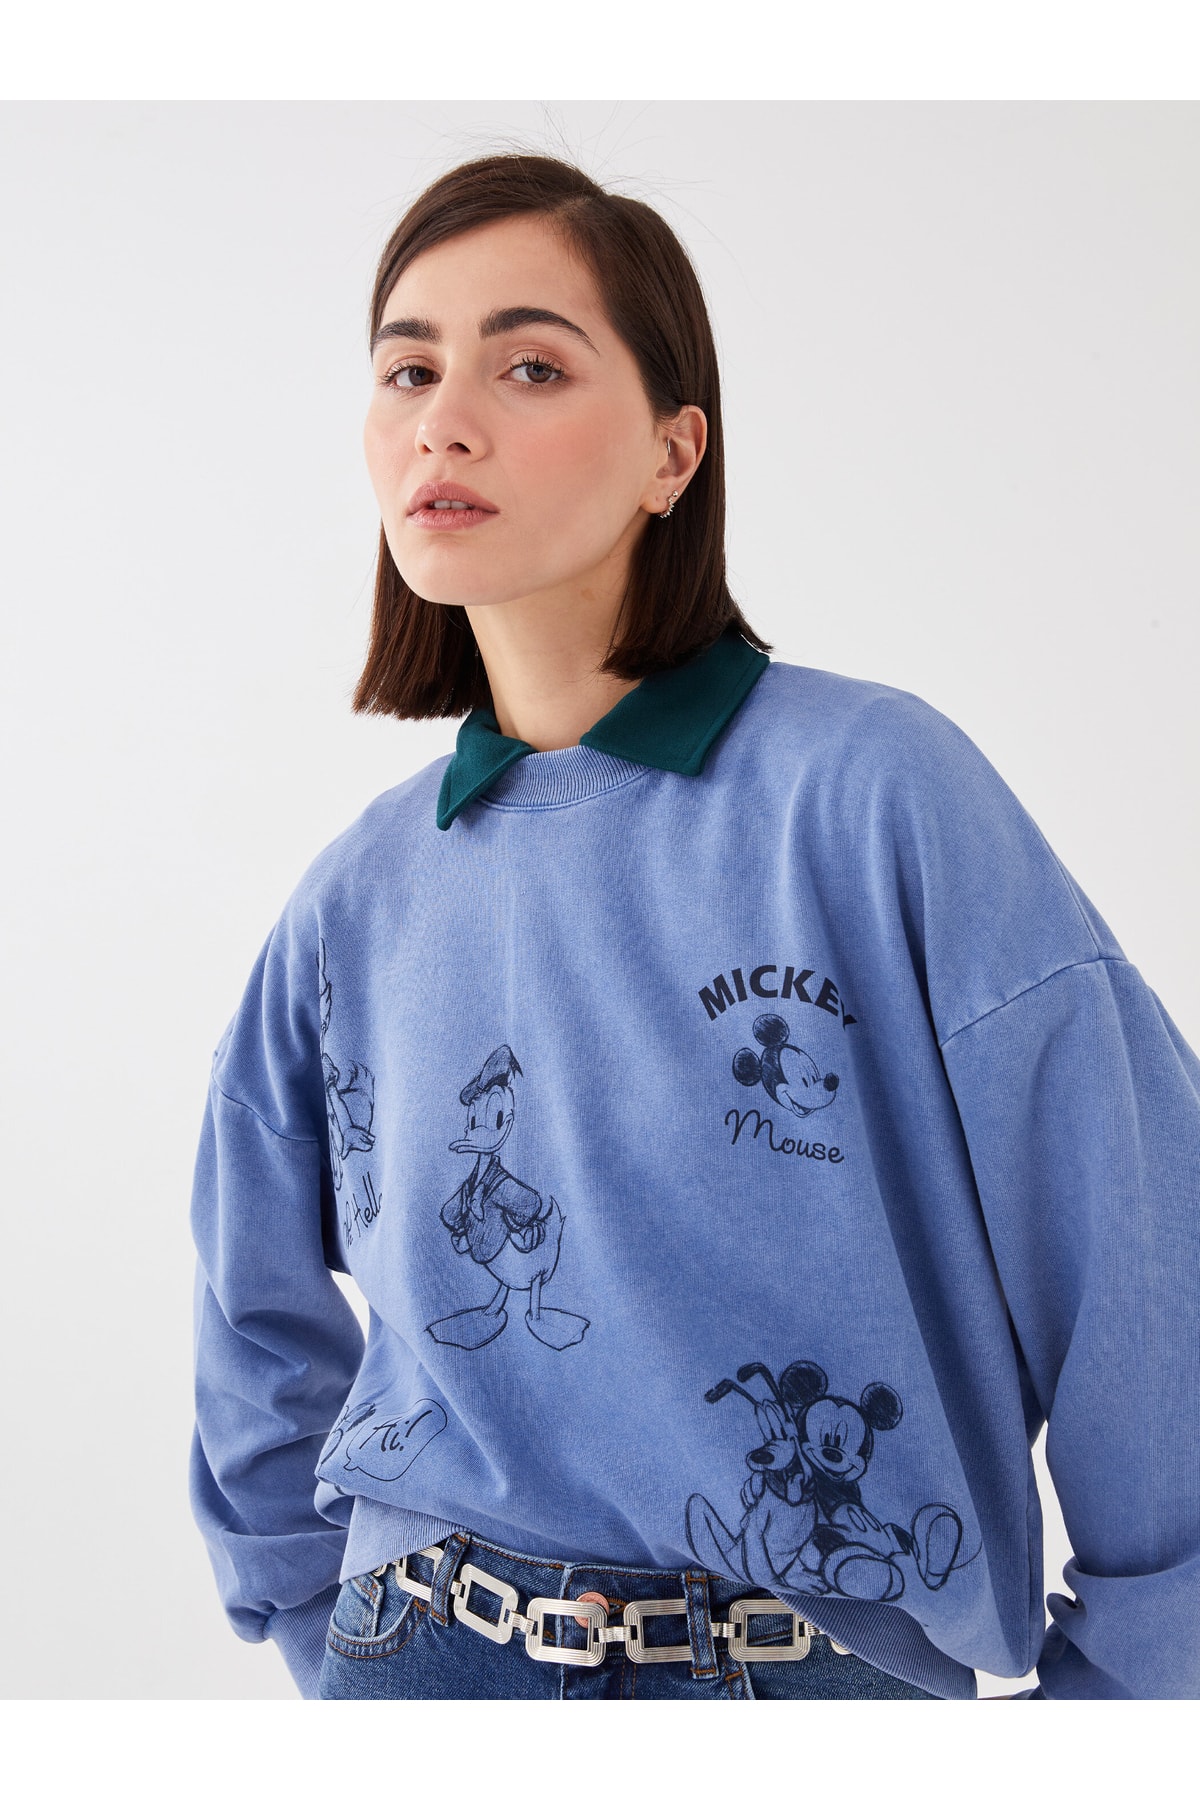 LC Waikiki Mickey Mouse And Friends Women's Printed Long Sleeve Sweatshirt